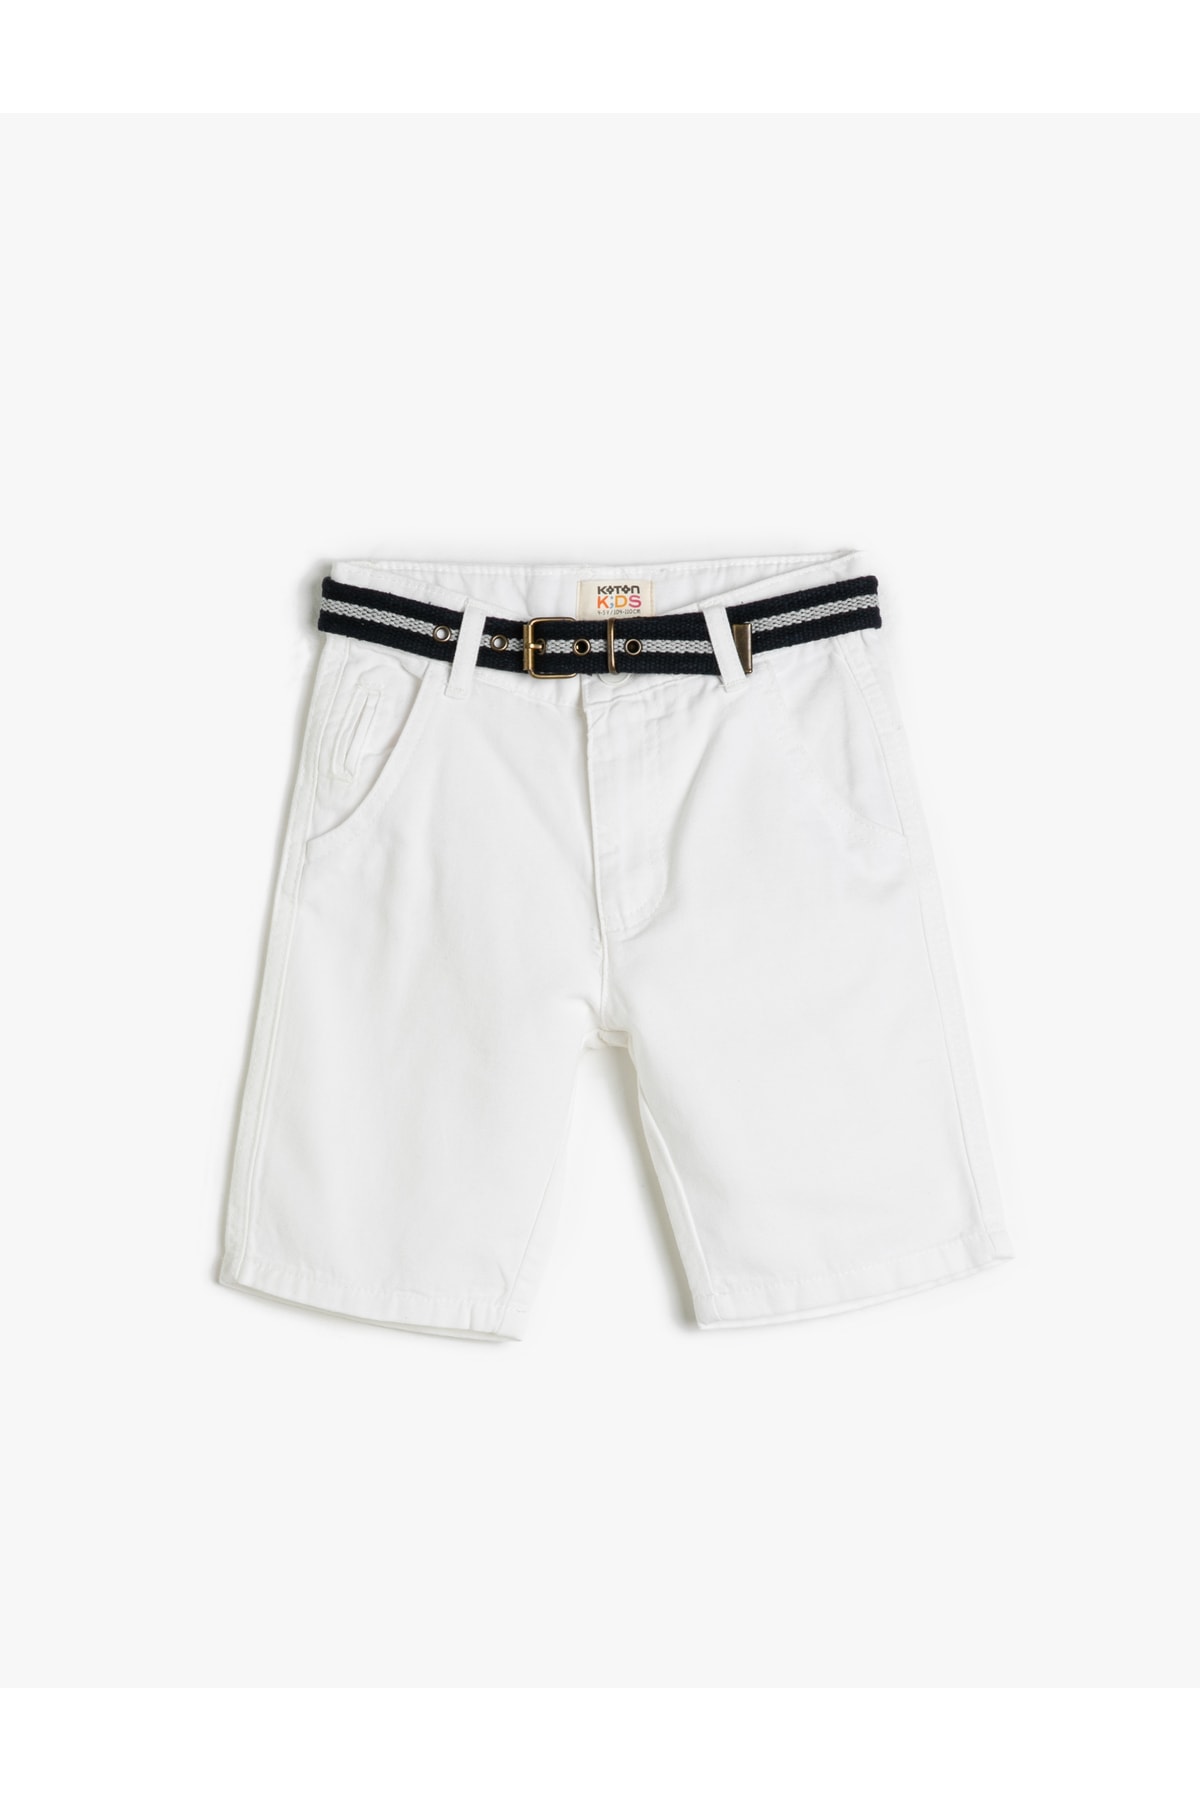 Koton Basic Bermuda Shorts With Belt Detail, Pockets, Cotton, Adjustable Elastic Waist